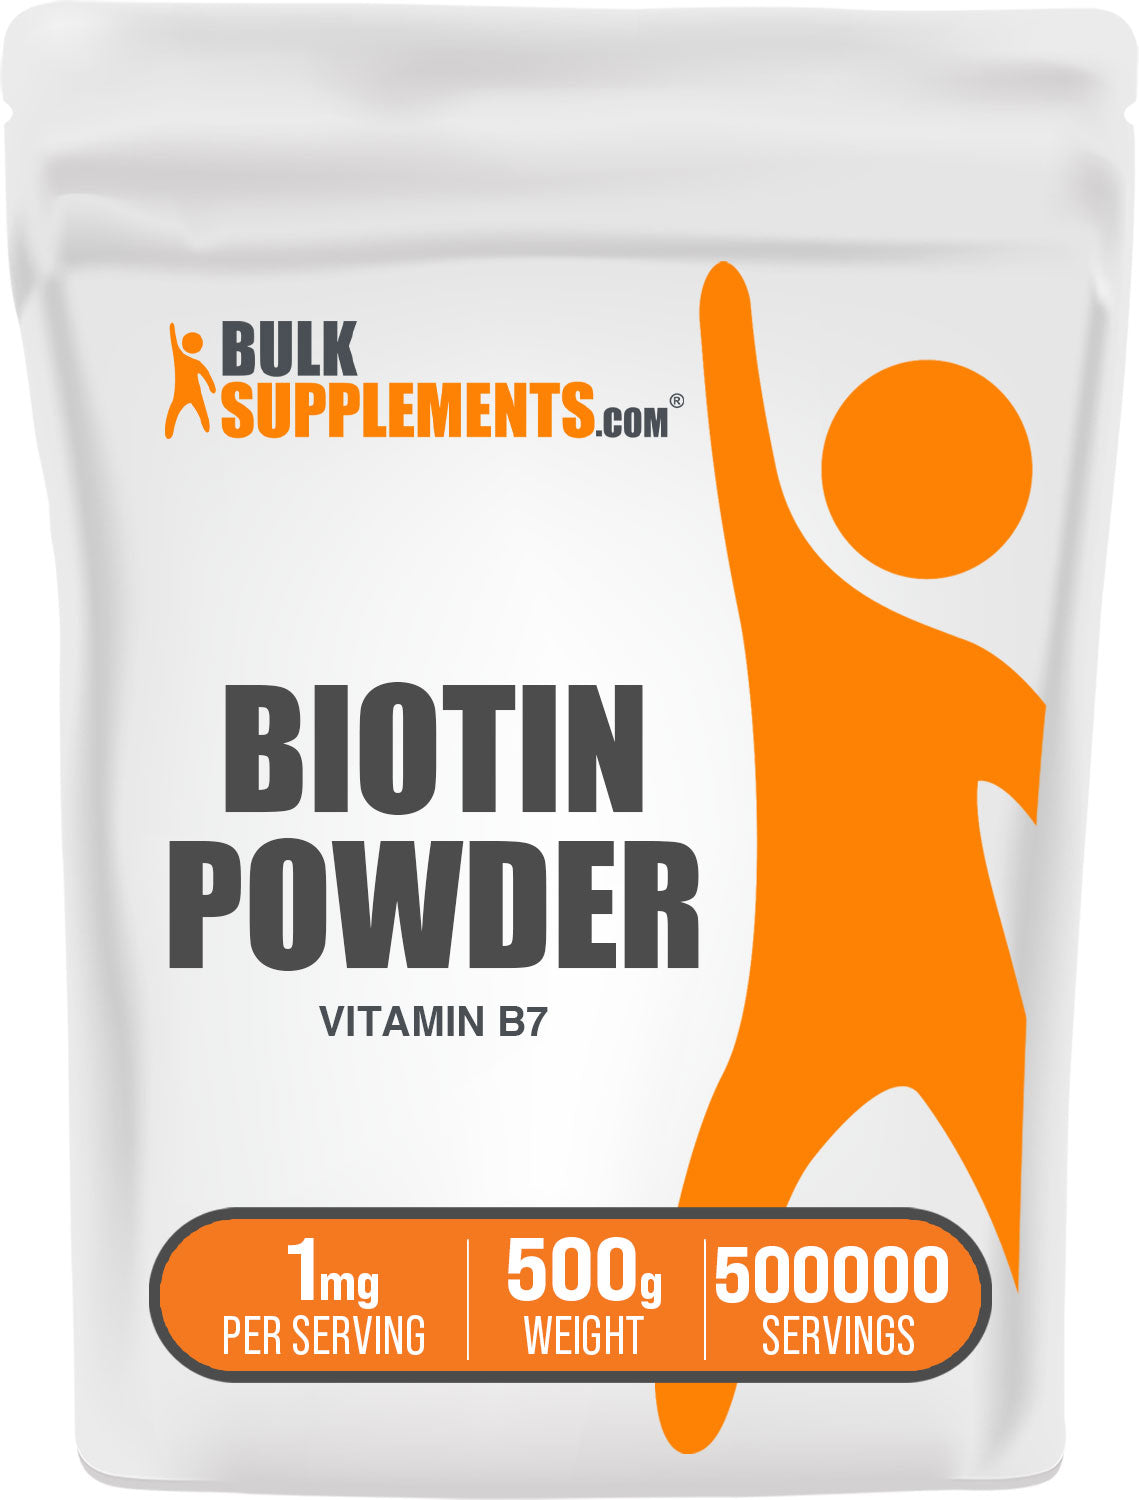 BulkSupplements Biotin Powder Vitamin B7 500g bag